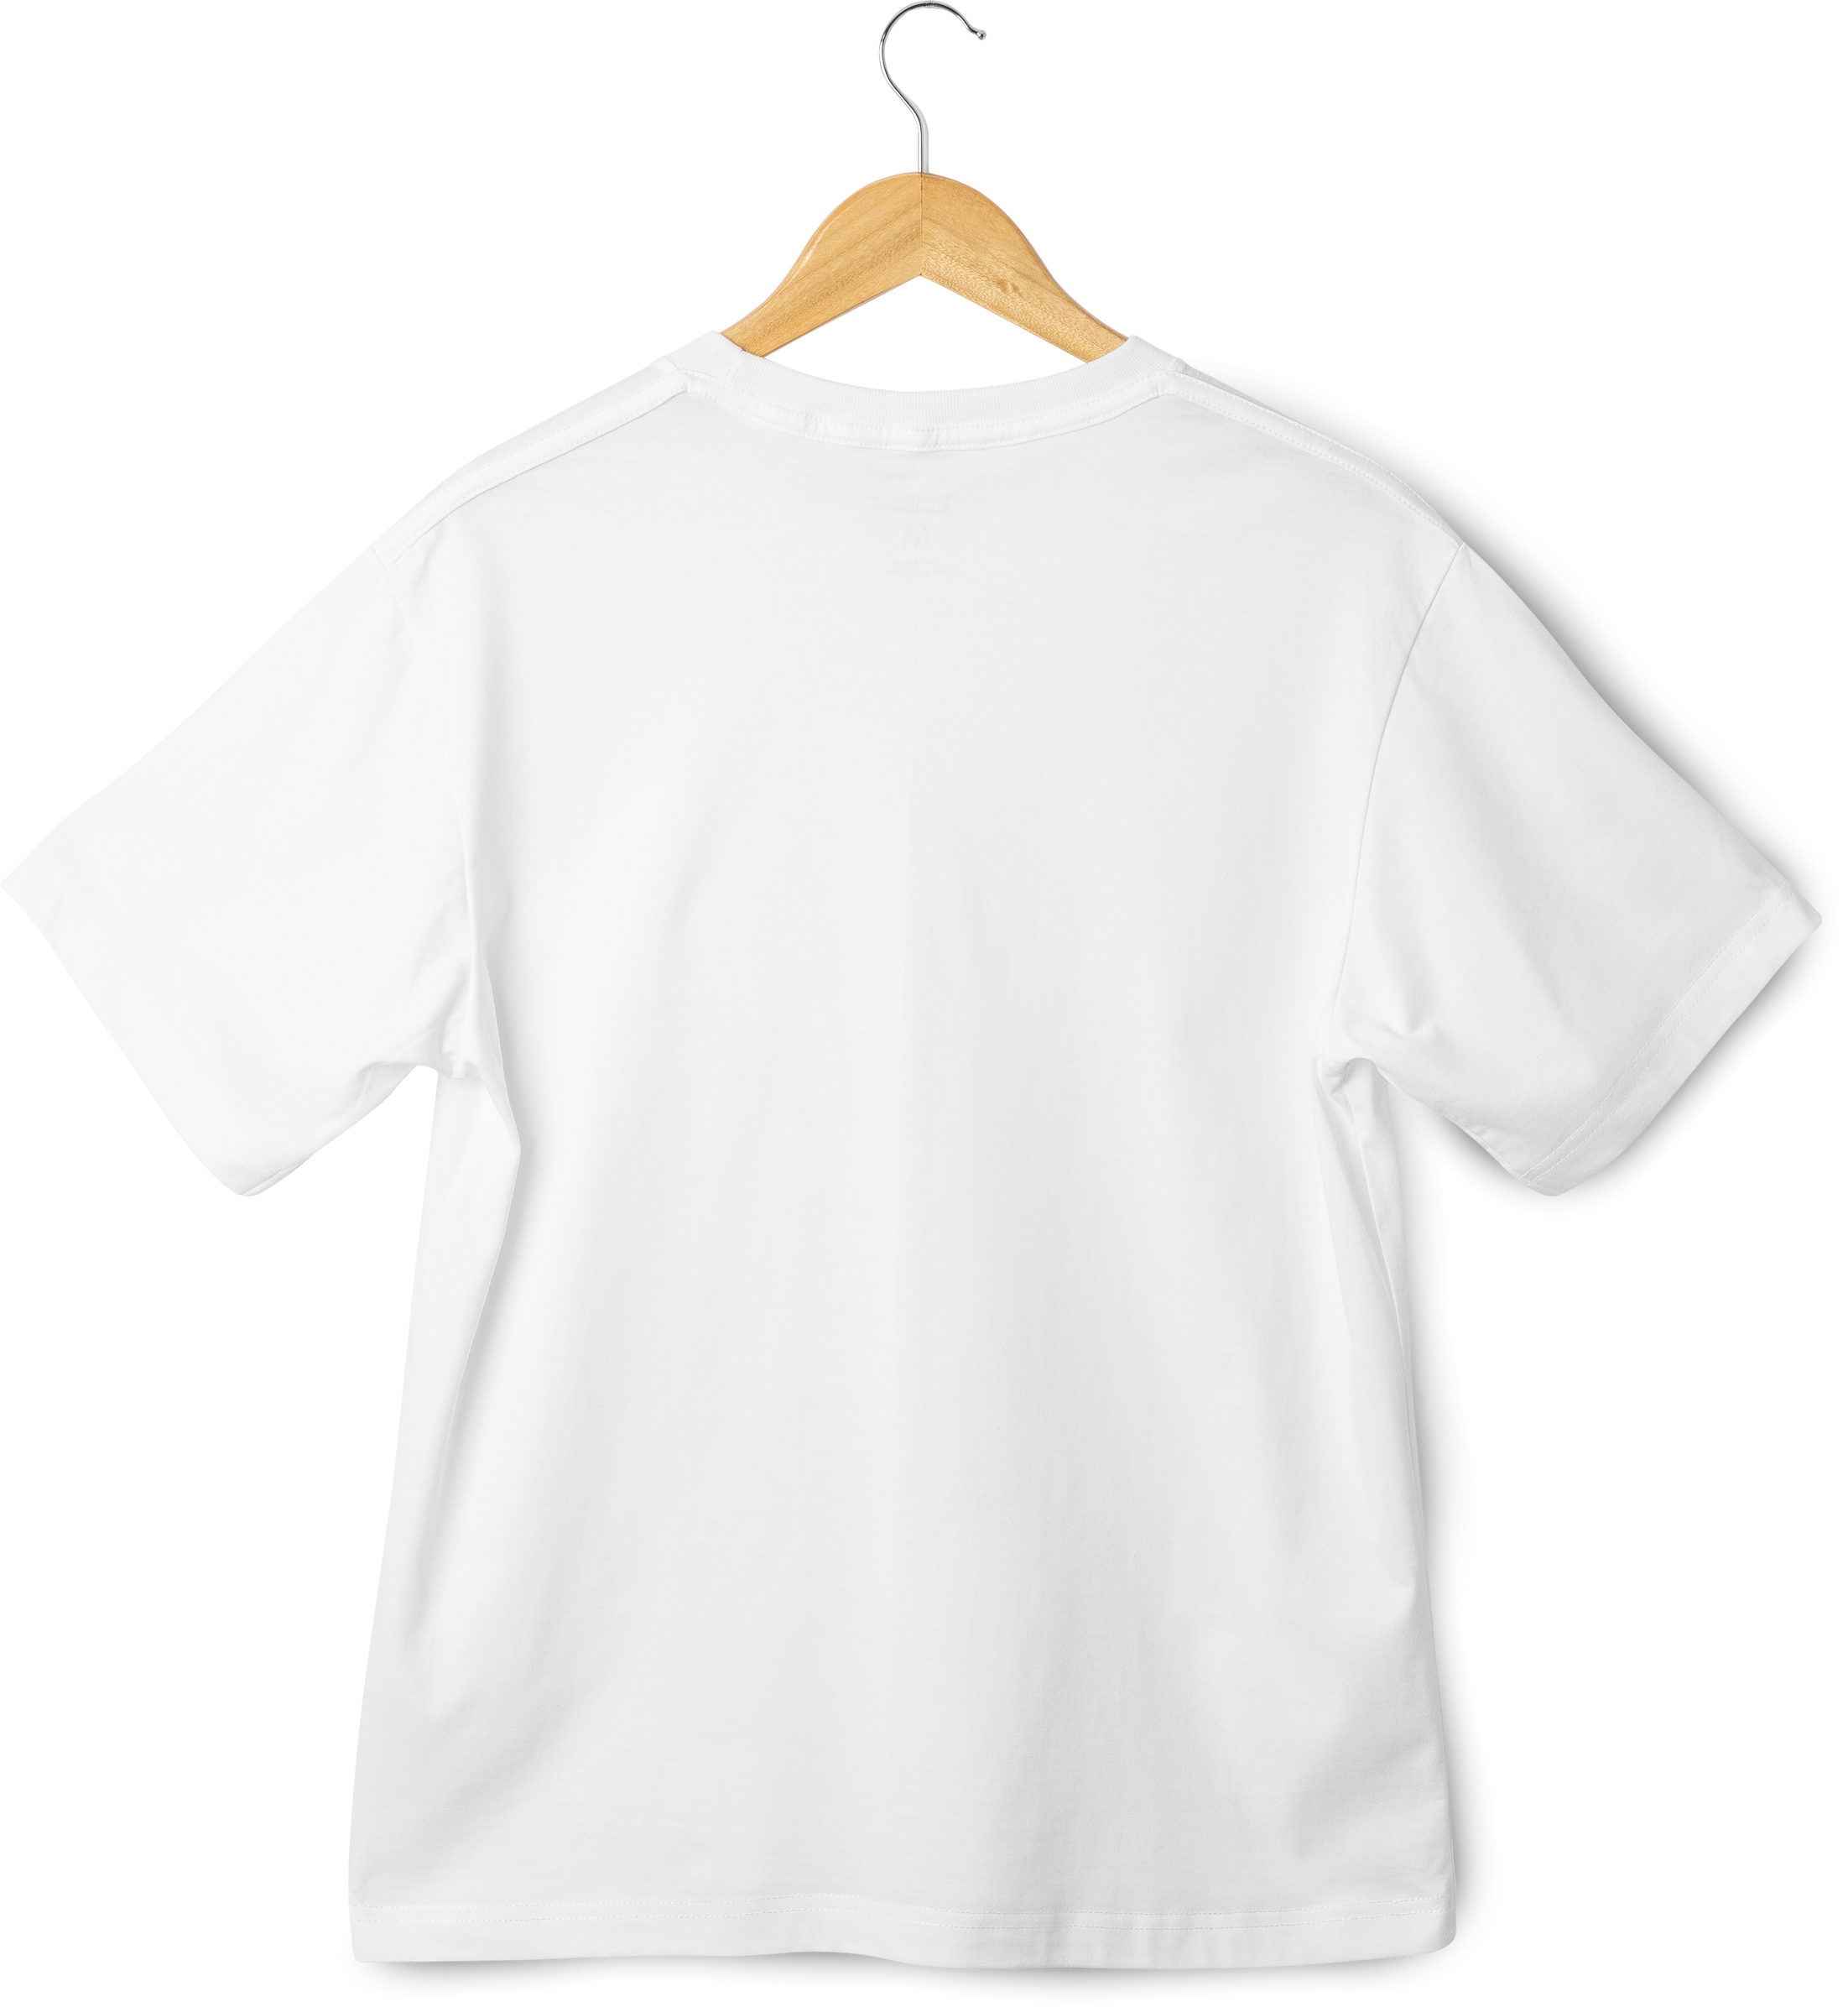 White T shirt mockup hanging, Realistic t-shirt